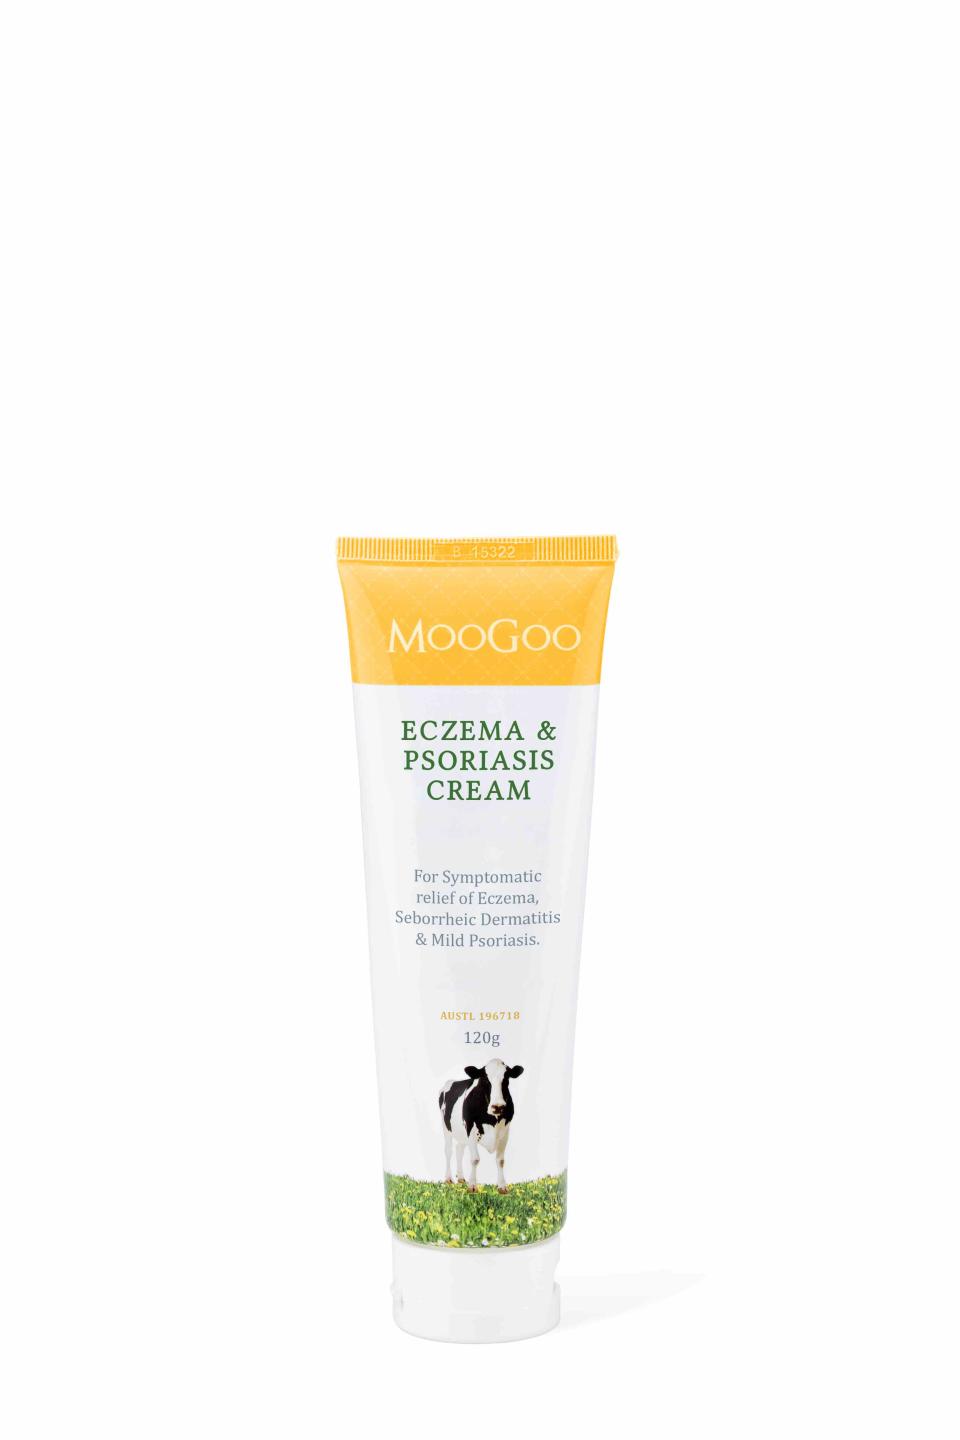 MooGoo Eczema & Psoriasis Cream. Photo: Supplied